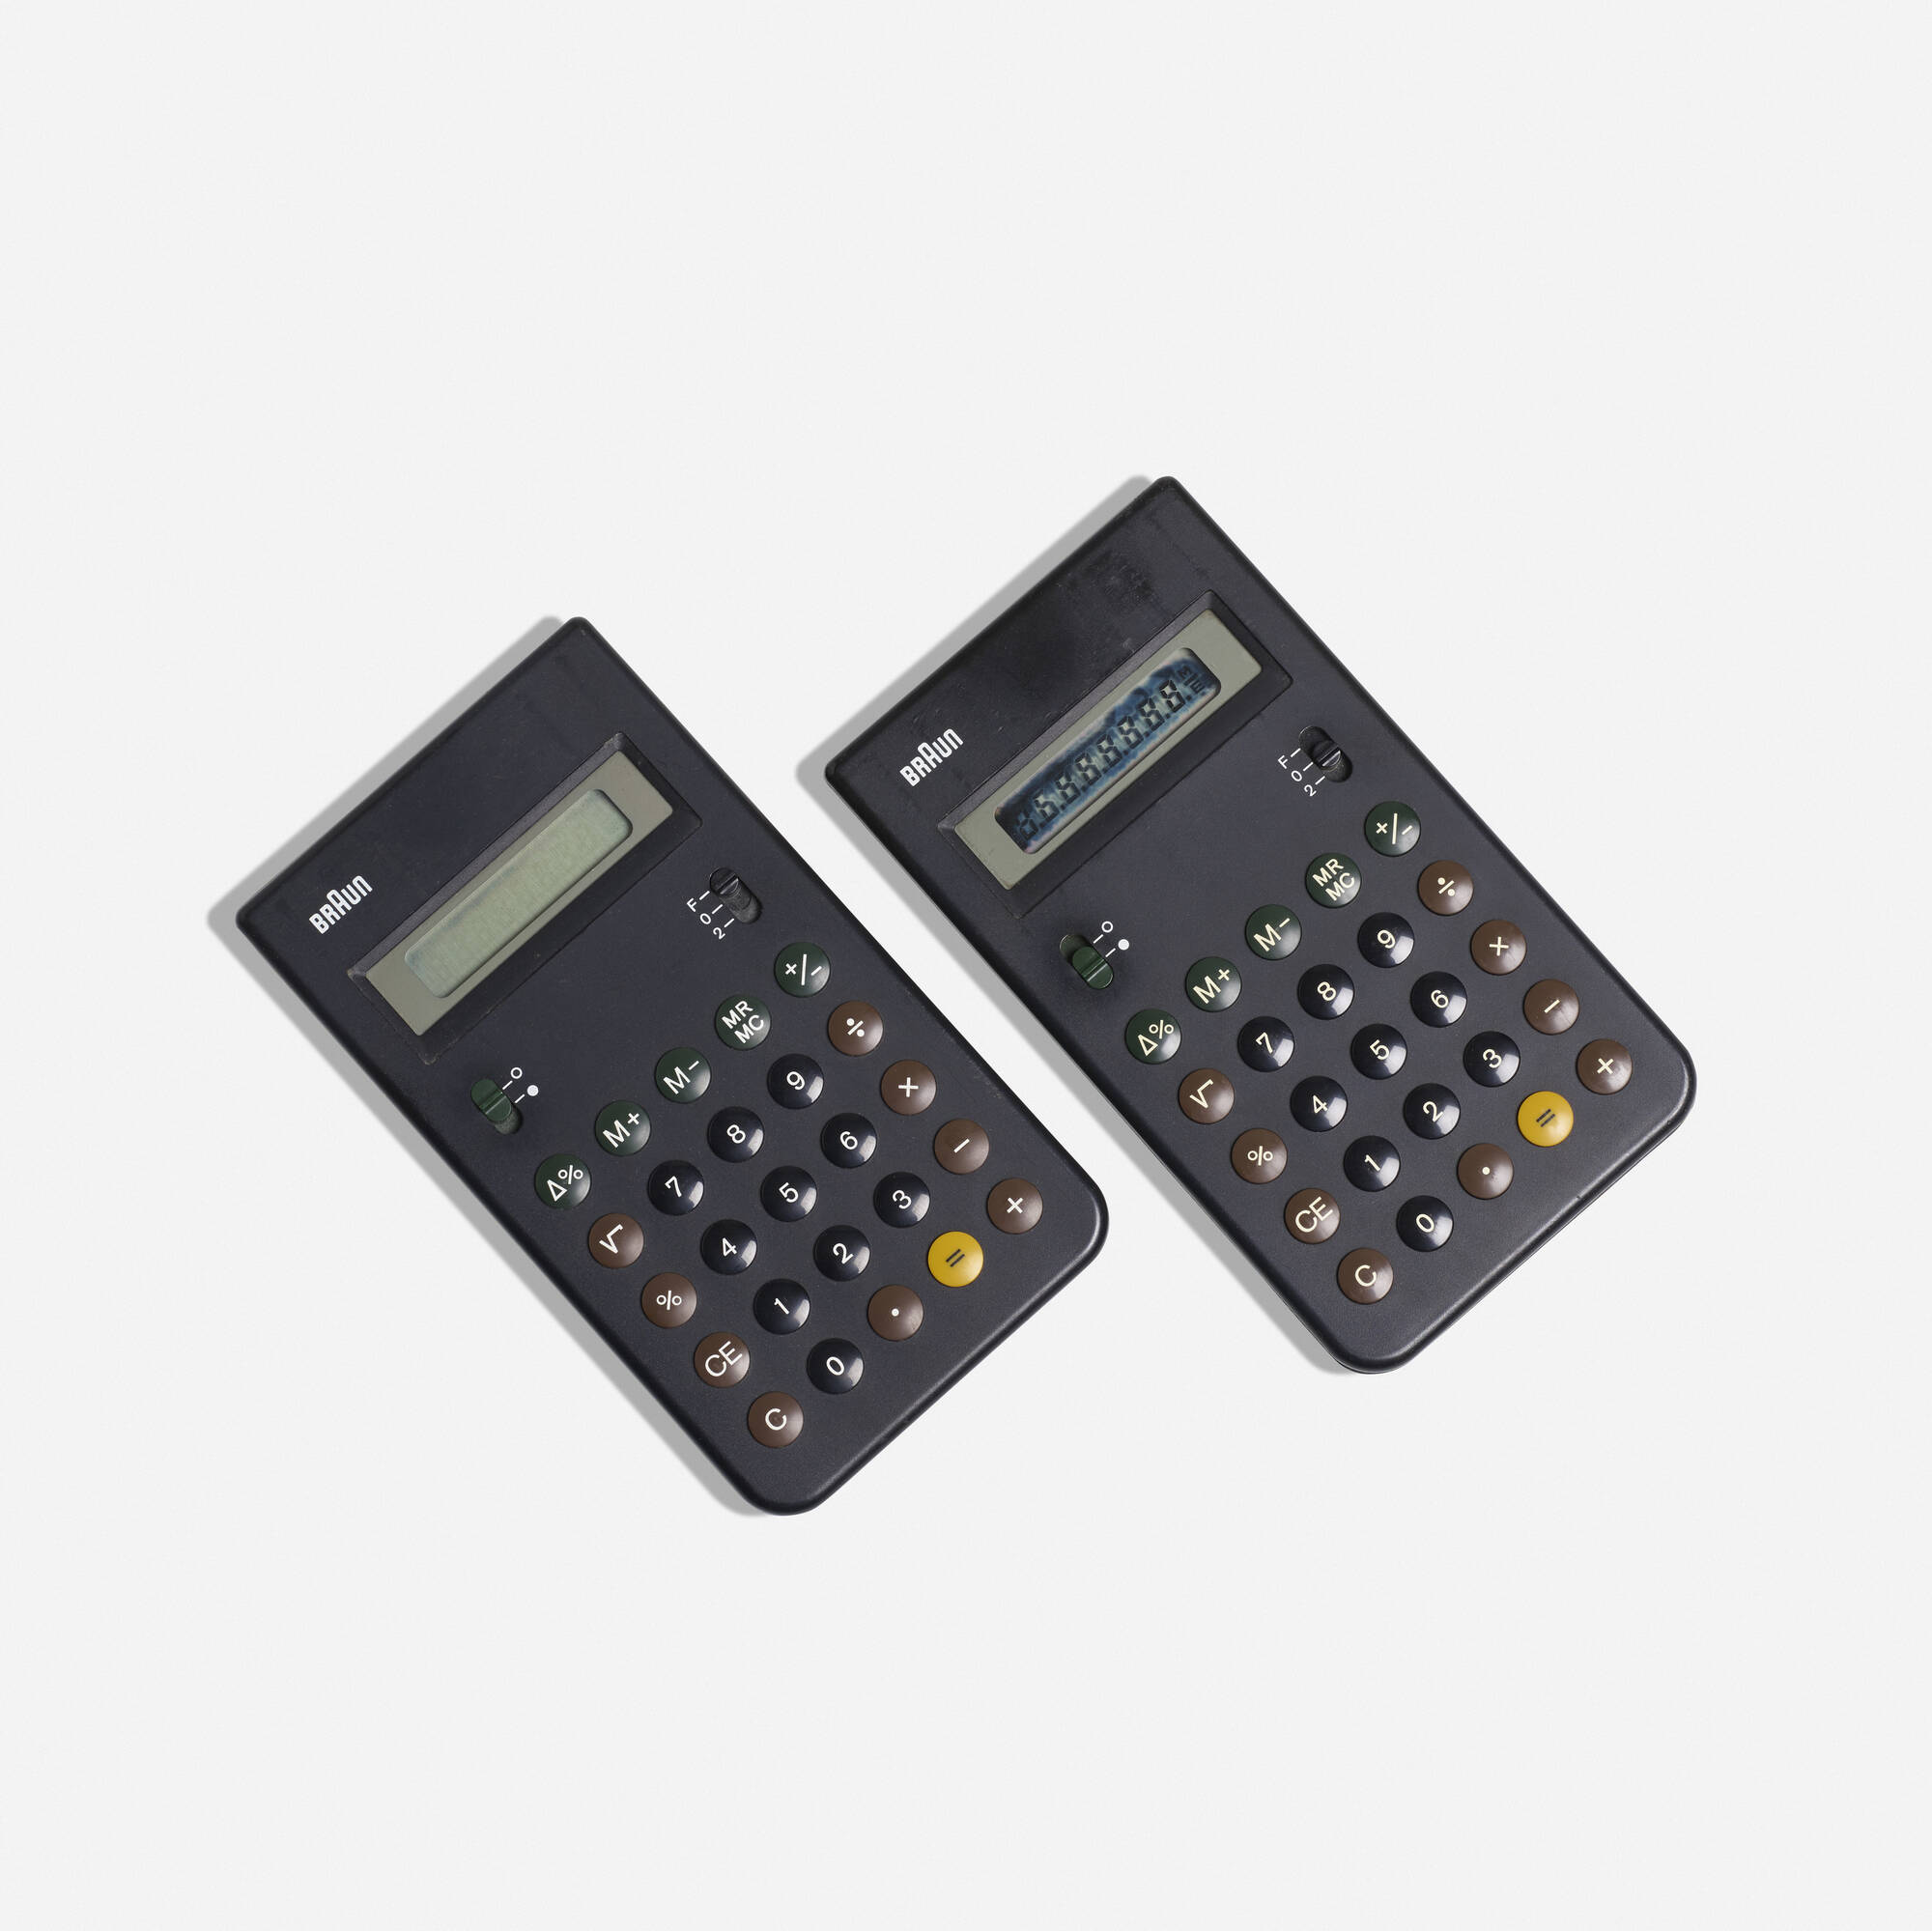 208: DIETER RAMS AND DIETRICH LUBS, ET 44 calculators, pair 